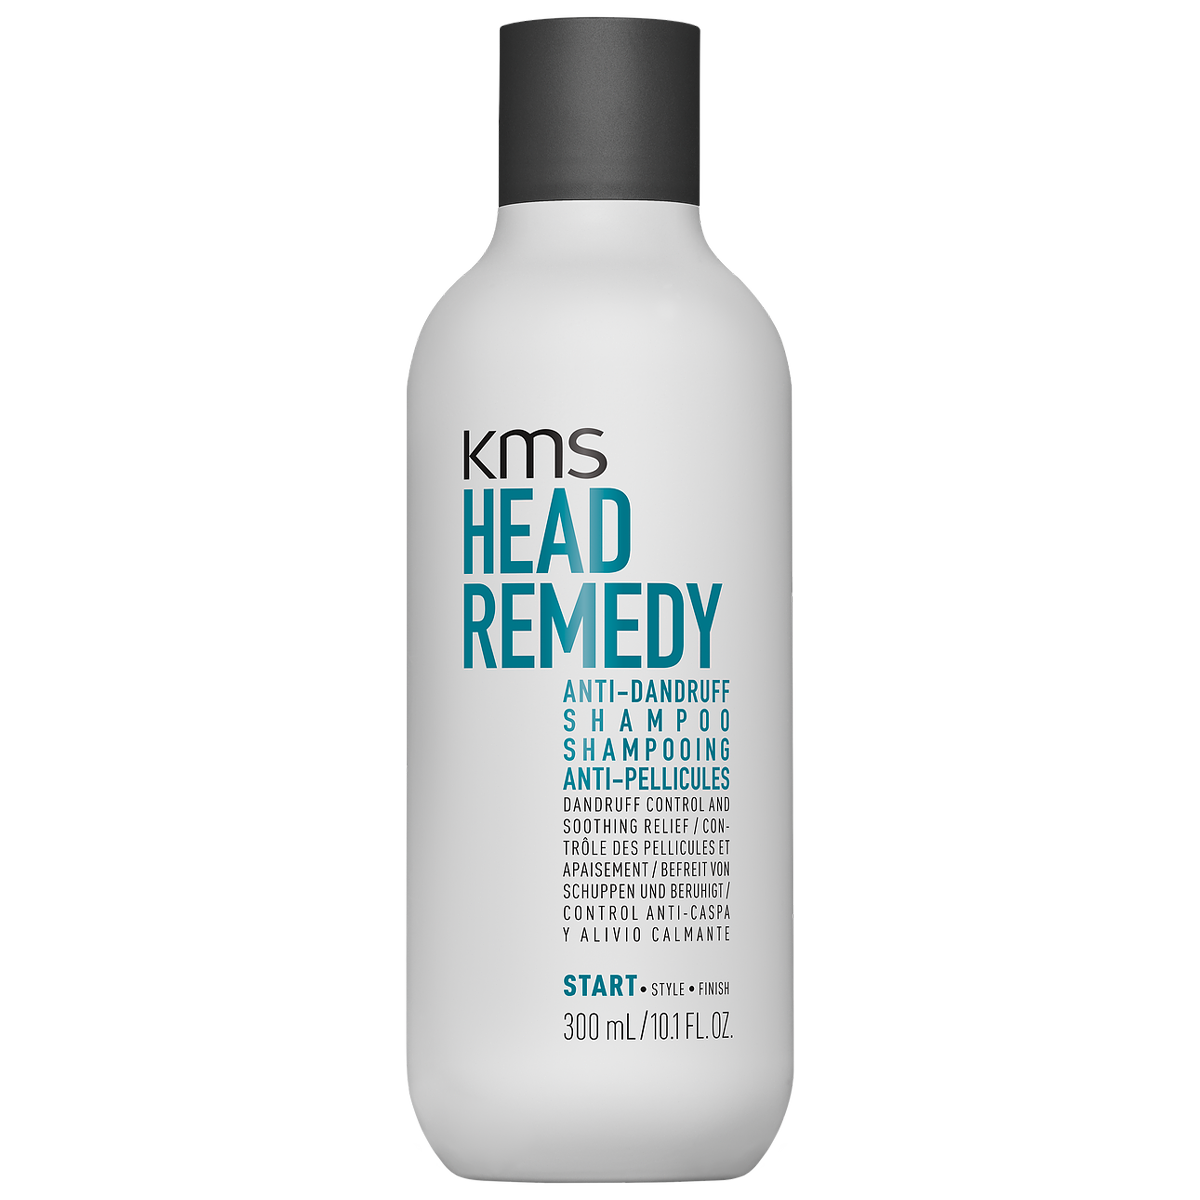 KMS Head Remedy Anti-dandruff Shampoo - Vogue International